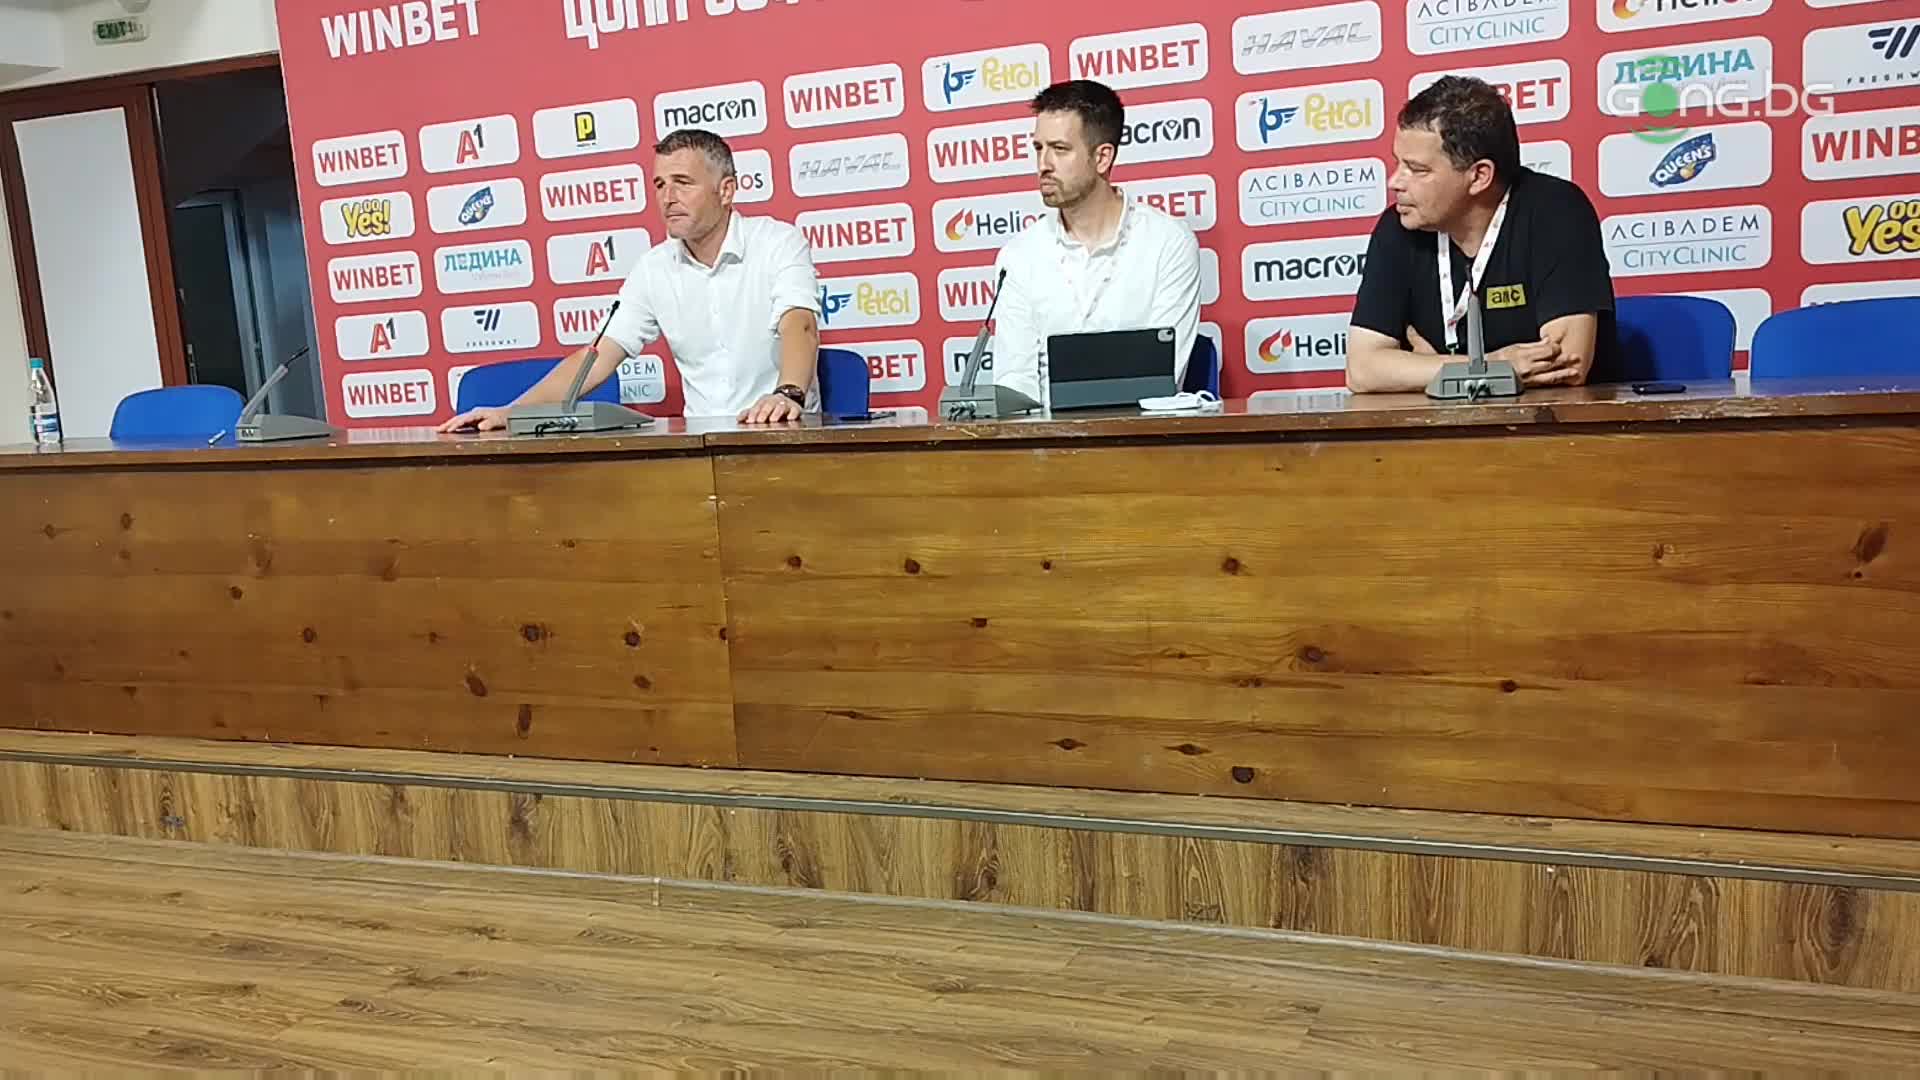 Александър Фрай: ЦСКА не ни изненада, не виждам проблем да победим у дома